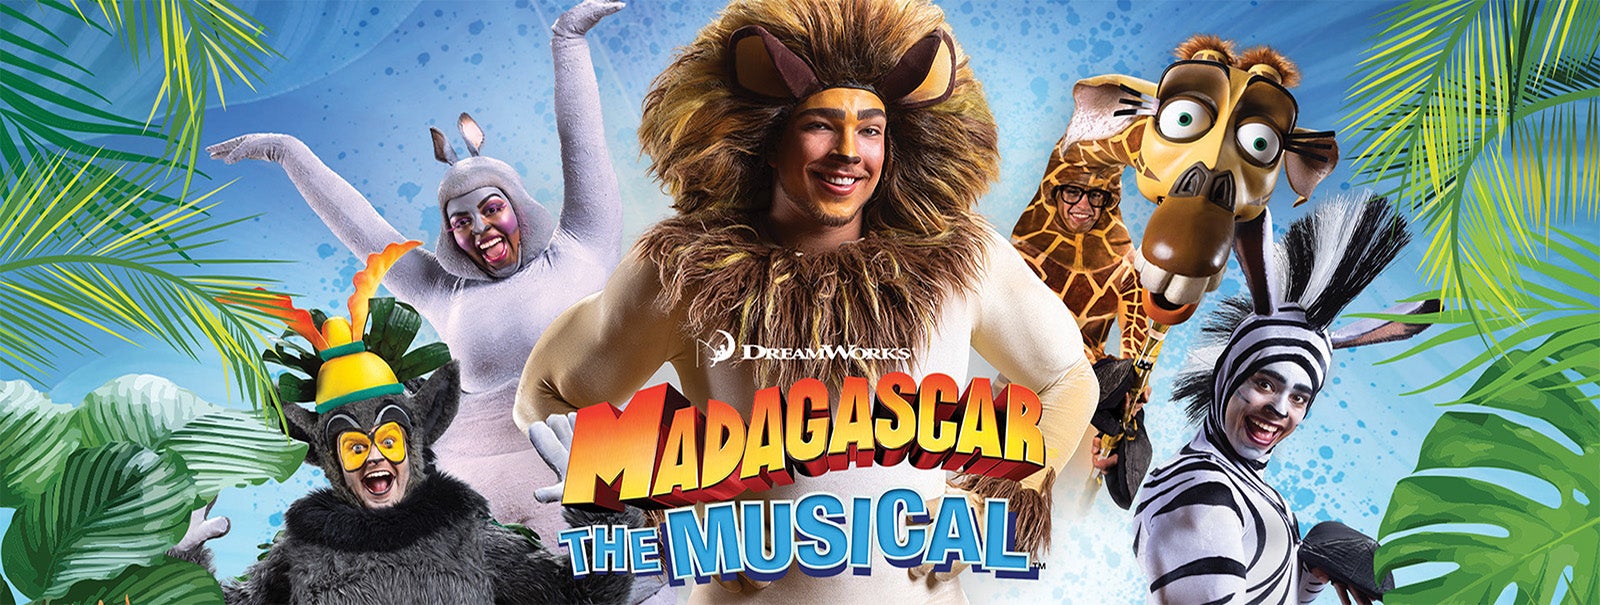 More Info - Madagascar The Musical